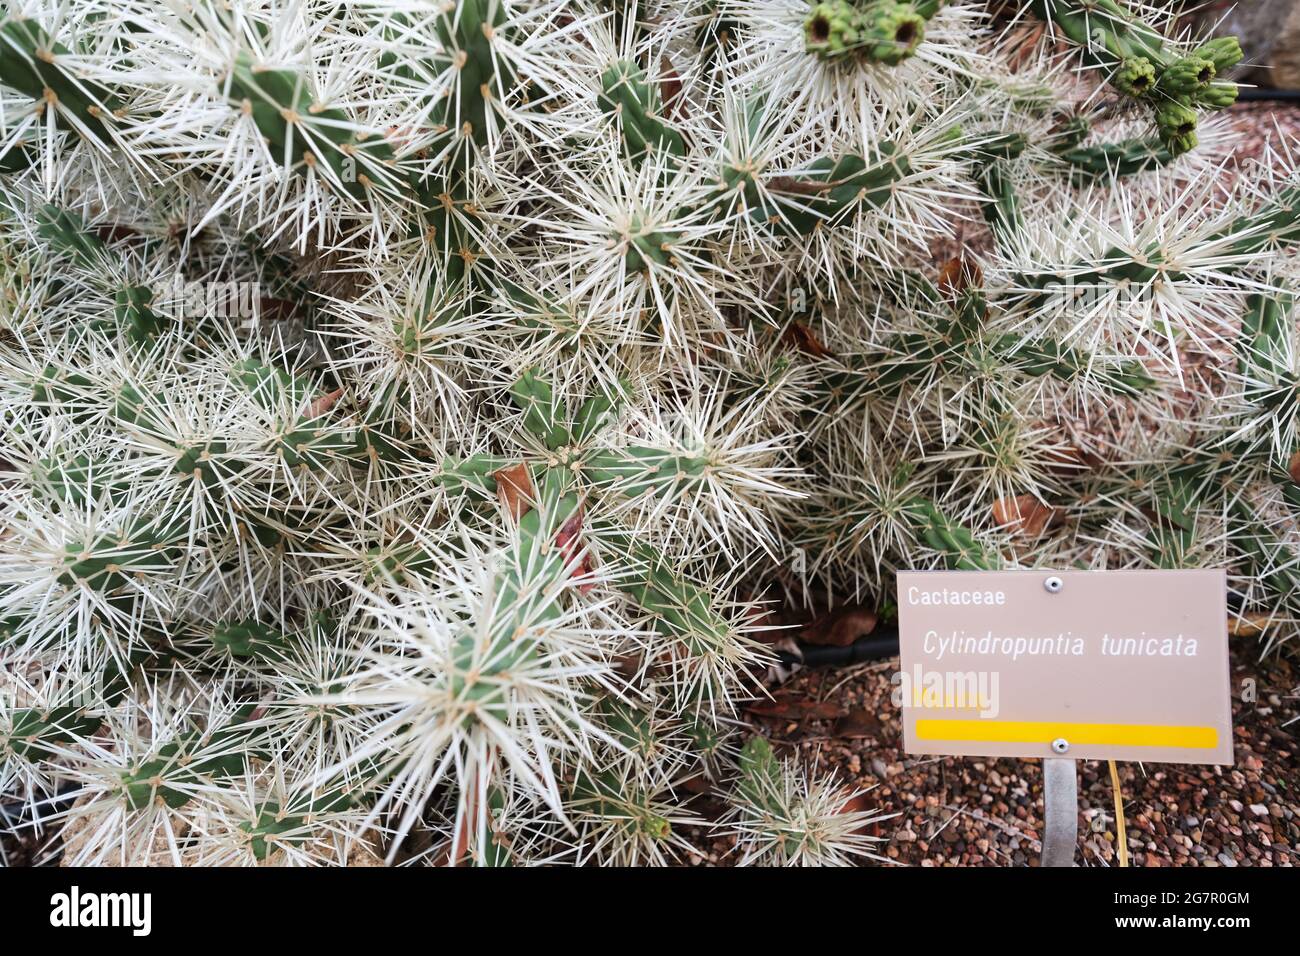 A rather prickly Cylindropuntia Tunicata in the Adelaide Botanic Gardens in Adelaide Australia Stock Photo